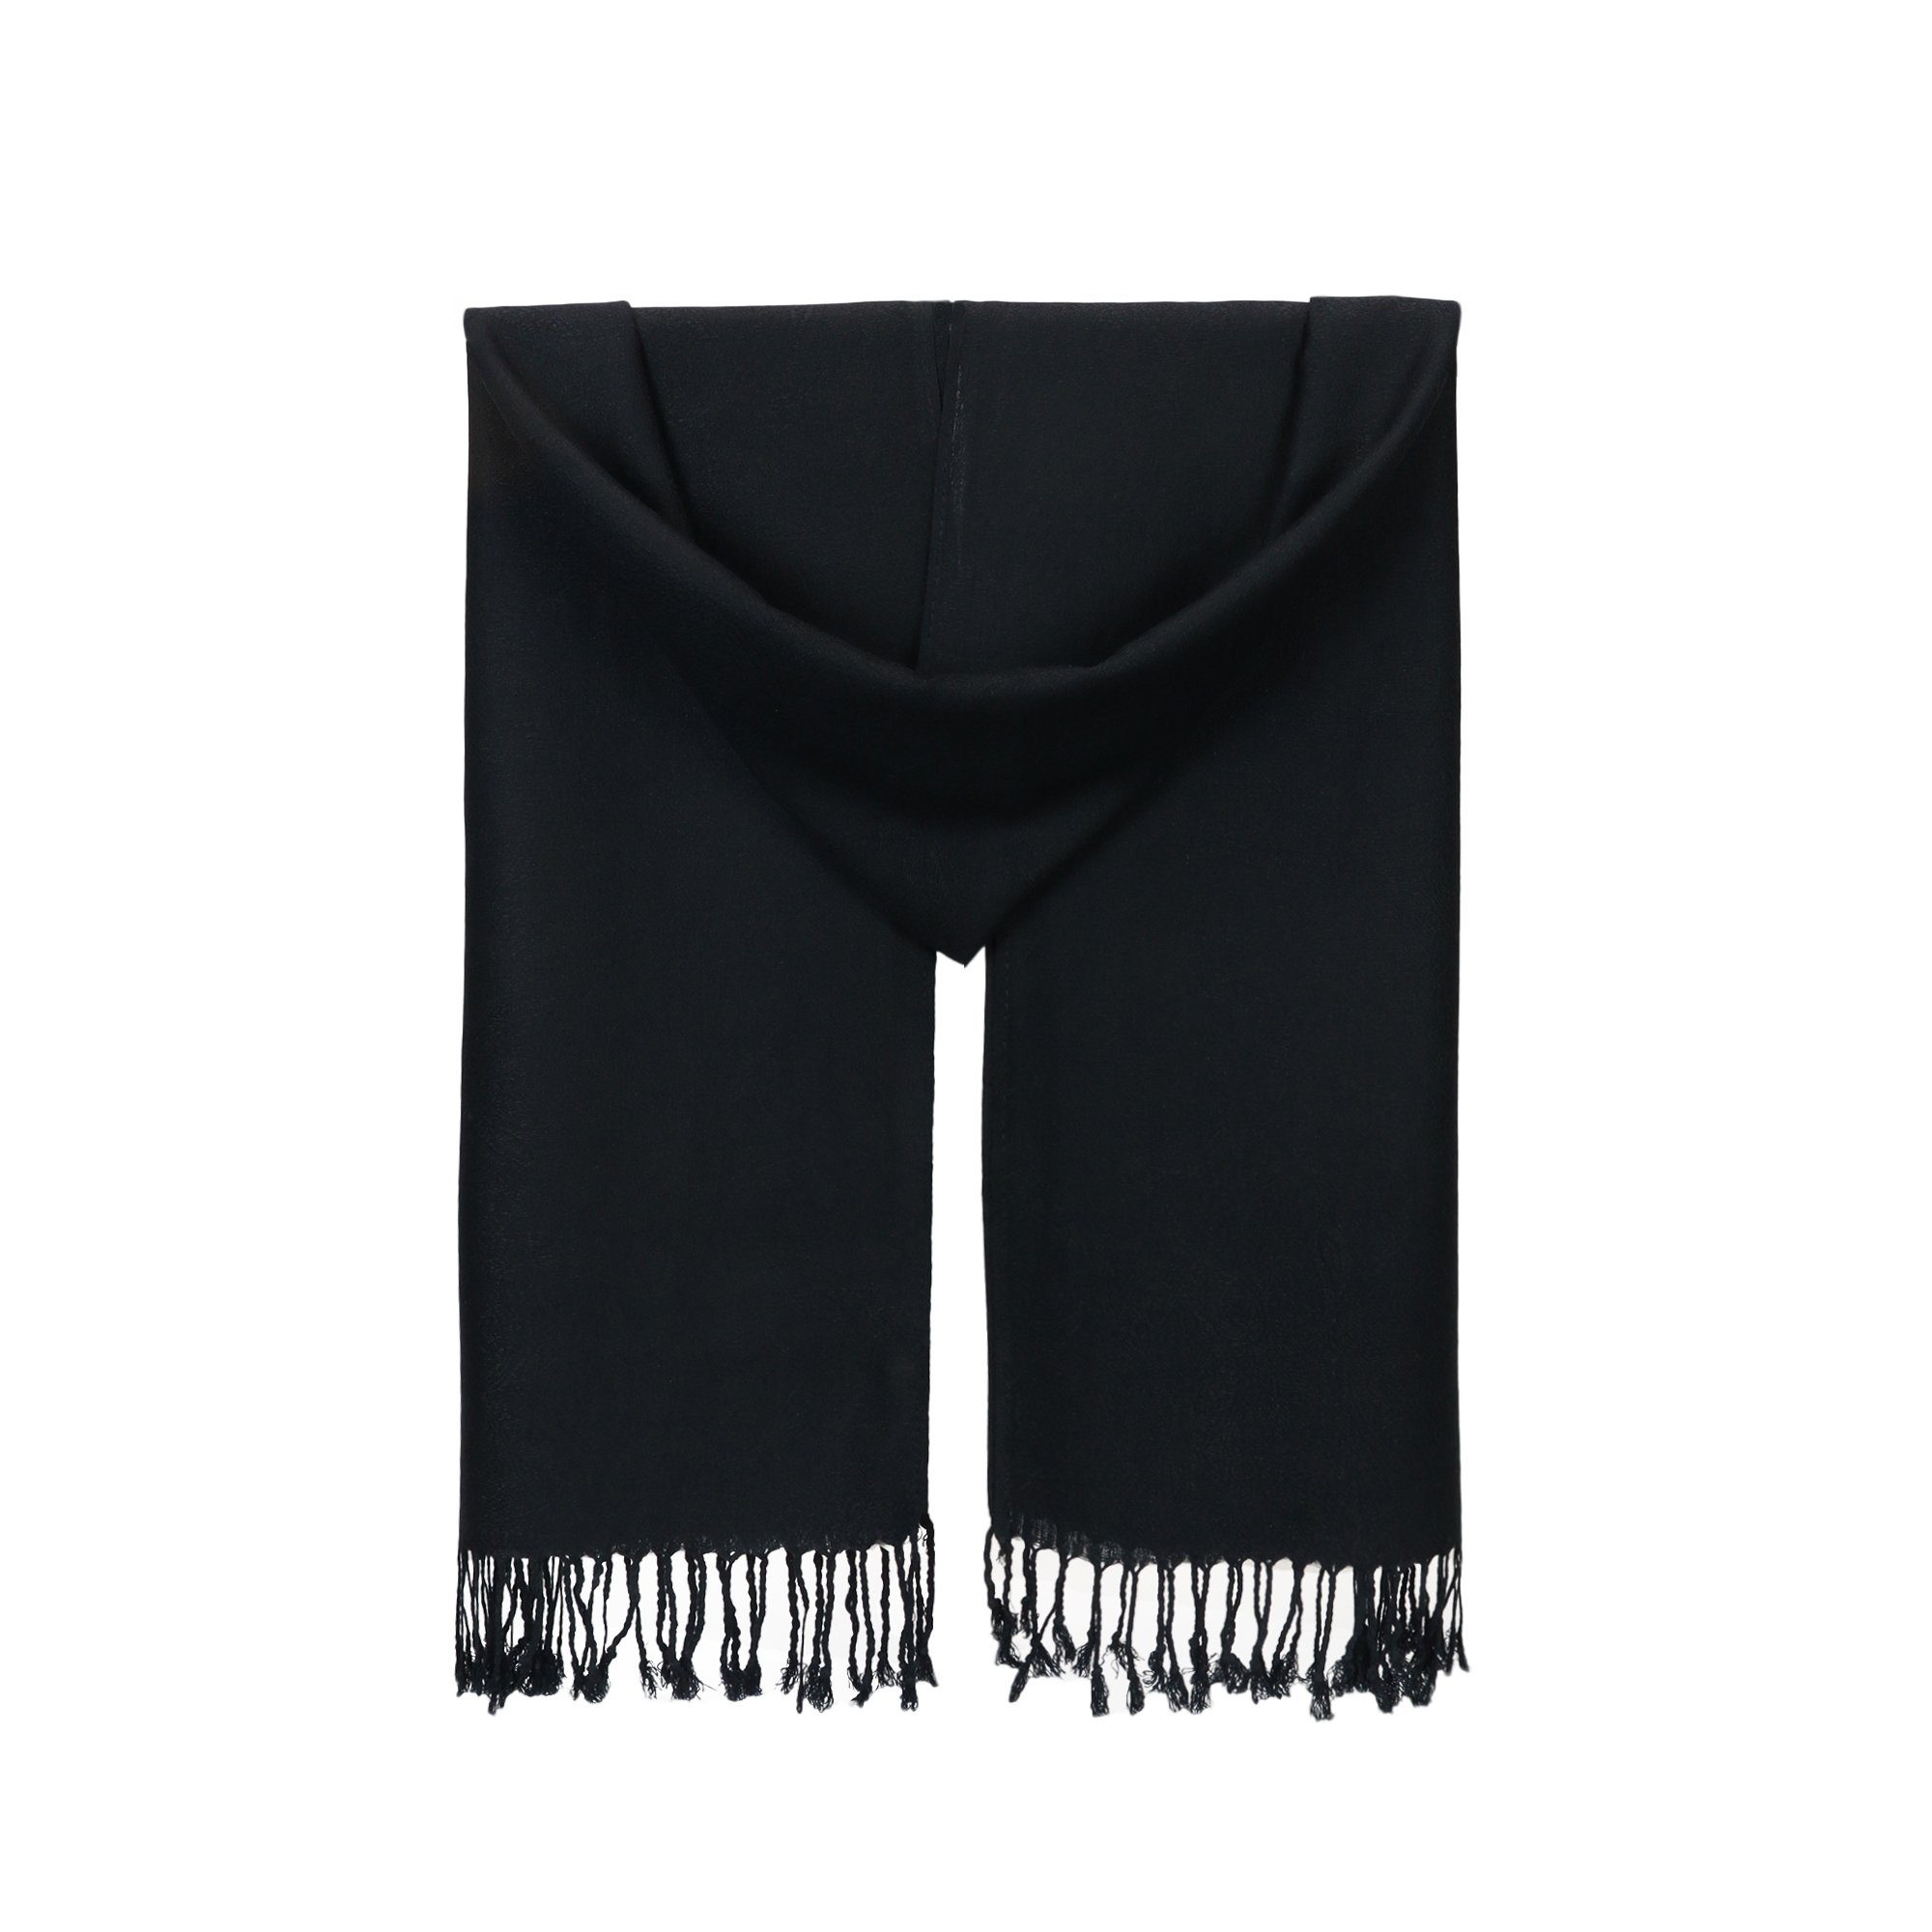 ZEBRO Modeschal Schal, schwarz Fransen